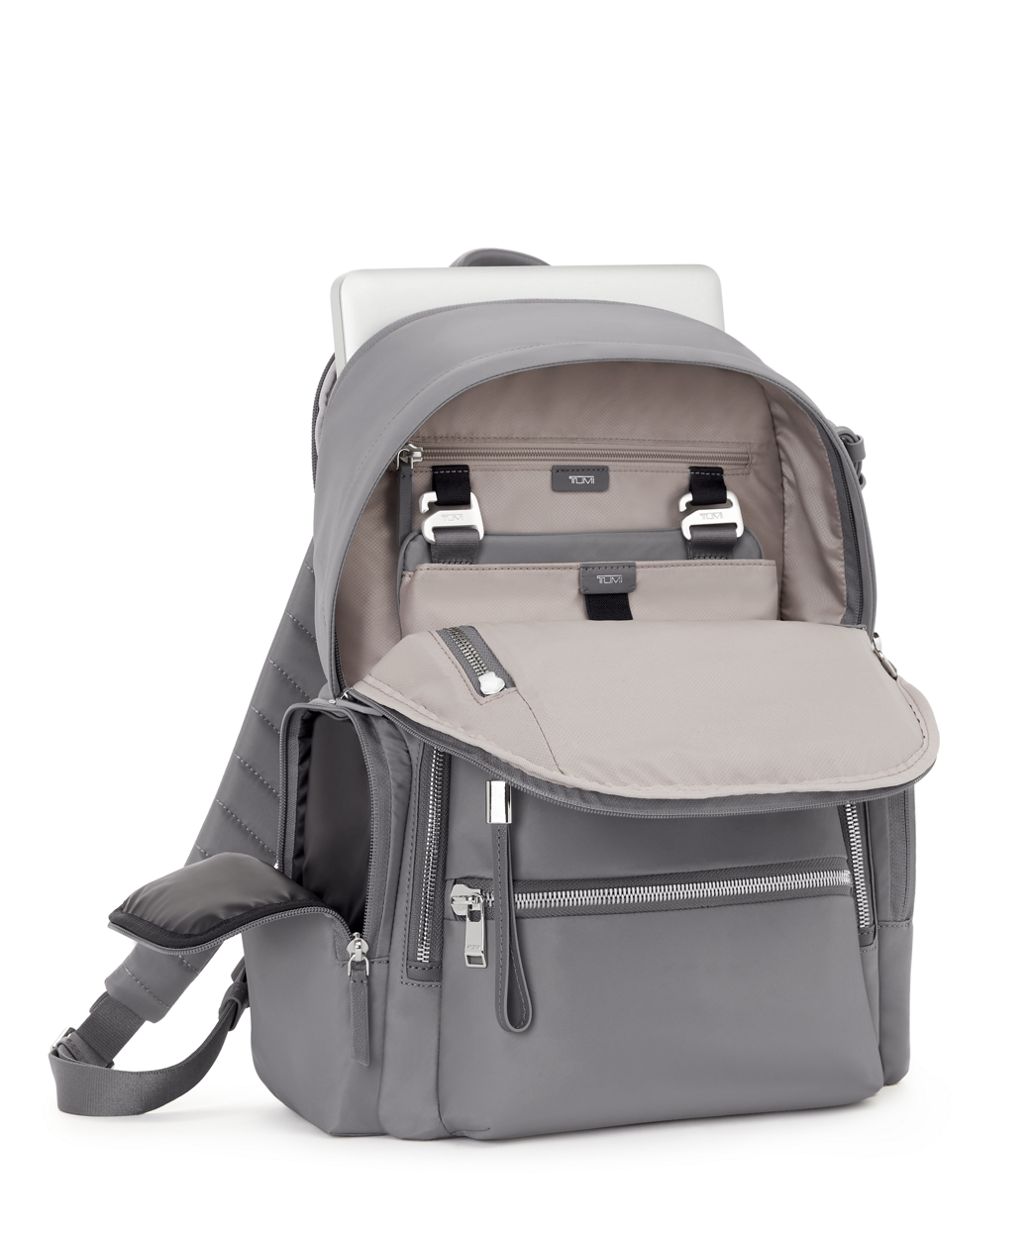 TUMI Voyageur Celina Backpack - Men's & Women's Backpack - Travel Bag -  Black - Gold Hardware - 16.0 X 10.6 X 6.5